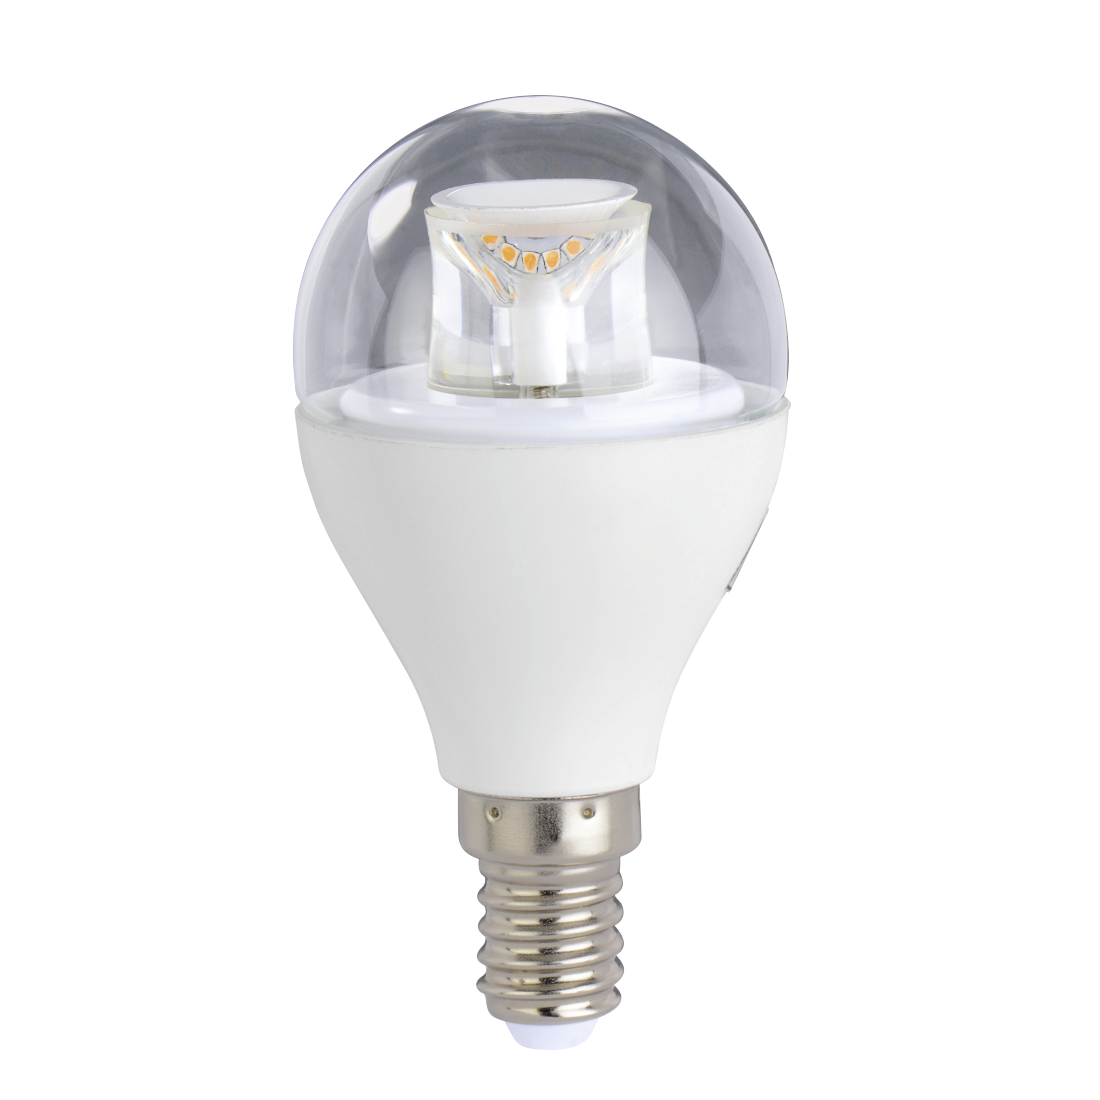 abx Druckfähige Abbildung - Xavax, LED-Lampe, E14, 470lm ersetzt 40W, Tropfenlampe, Warmweiß, dimmbar